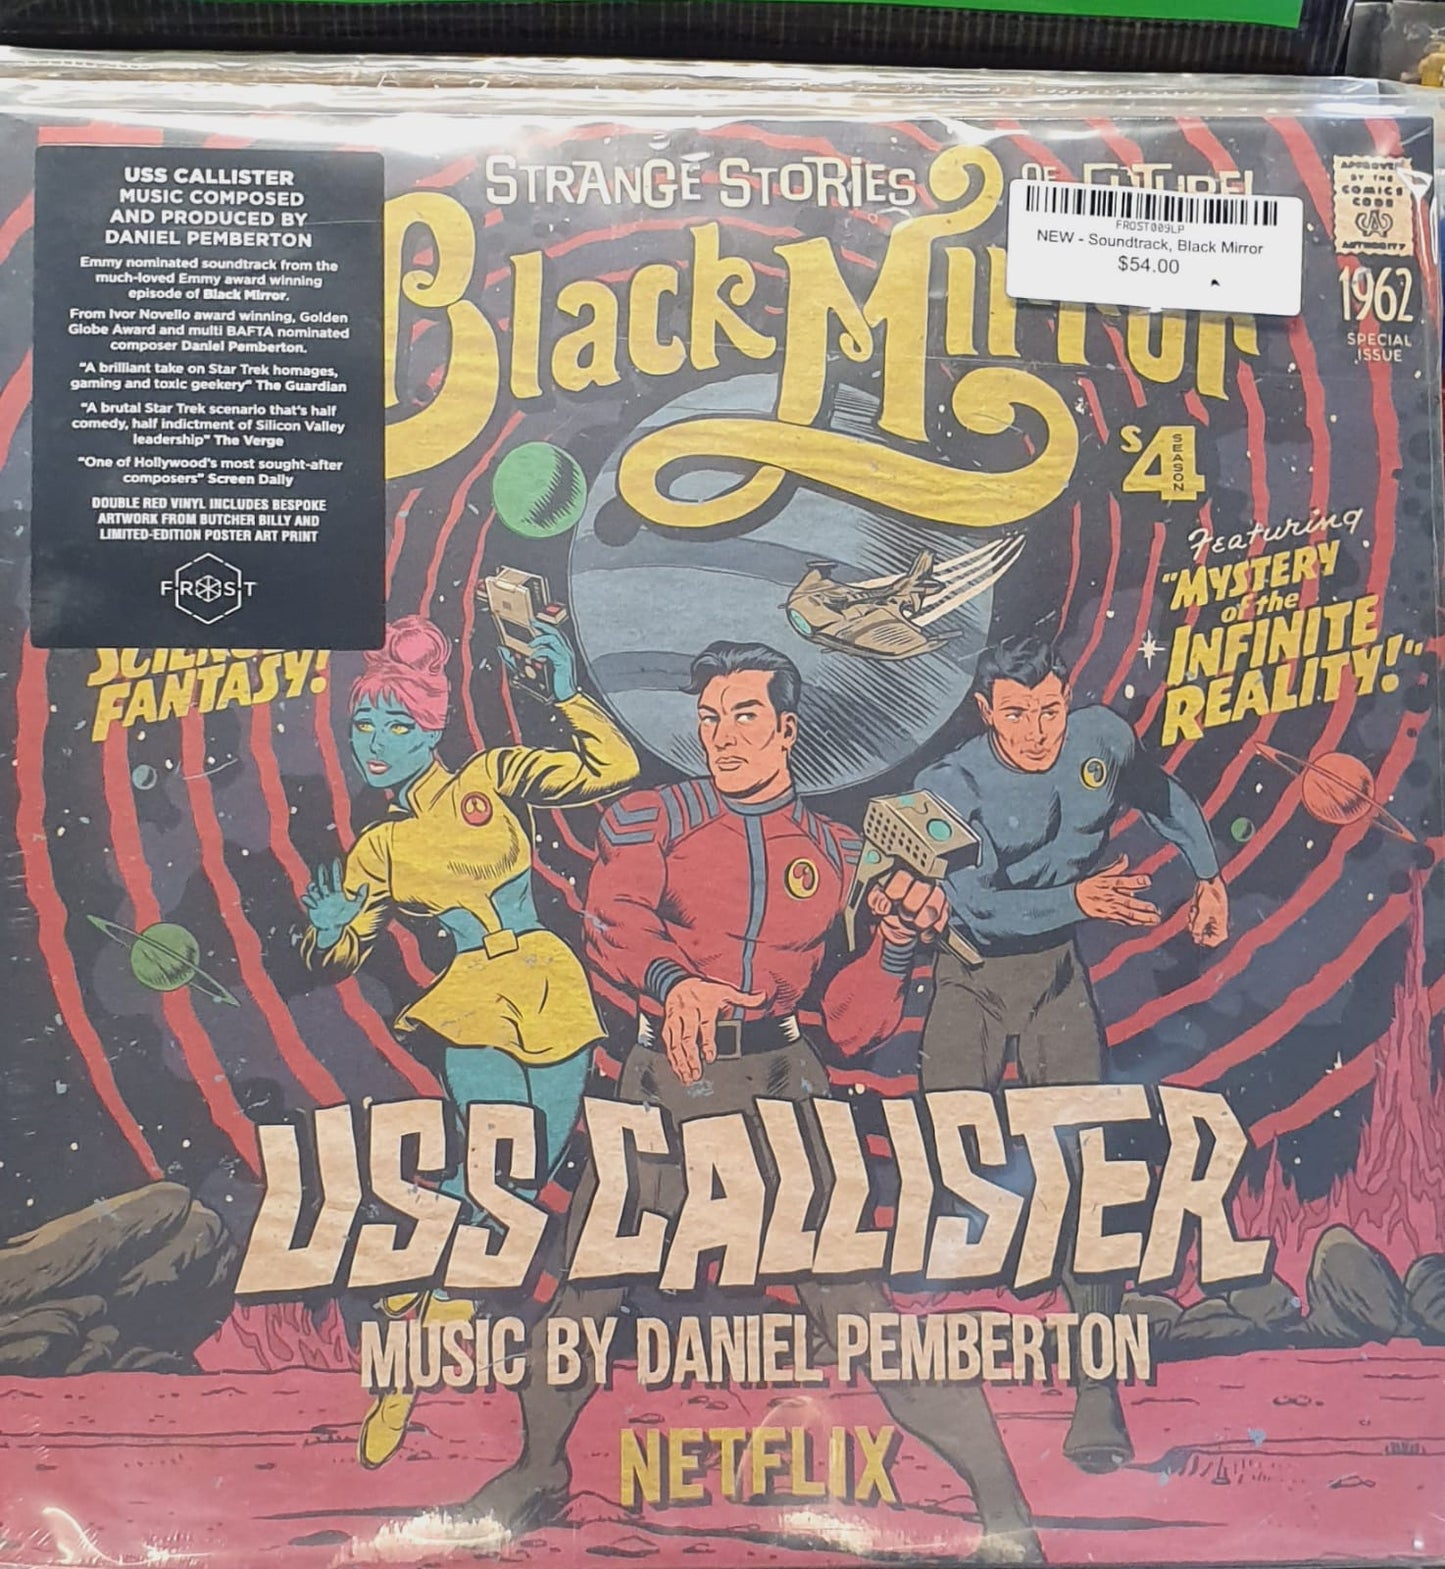 NEW - Soundtrack, Black Mirror - USS Callister (Original TV Soundtrack)  Red Vinyl